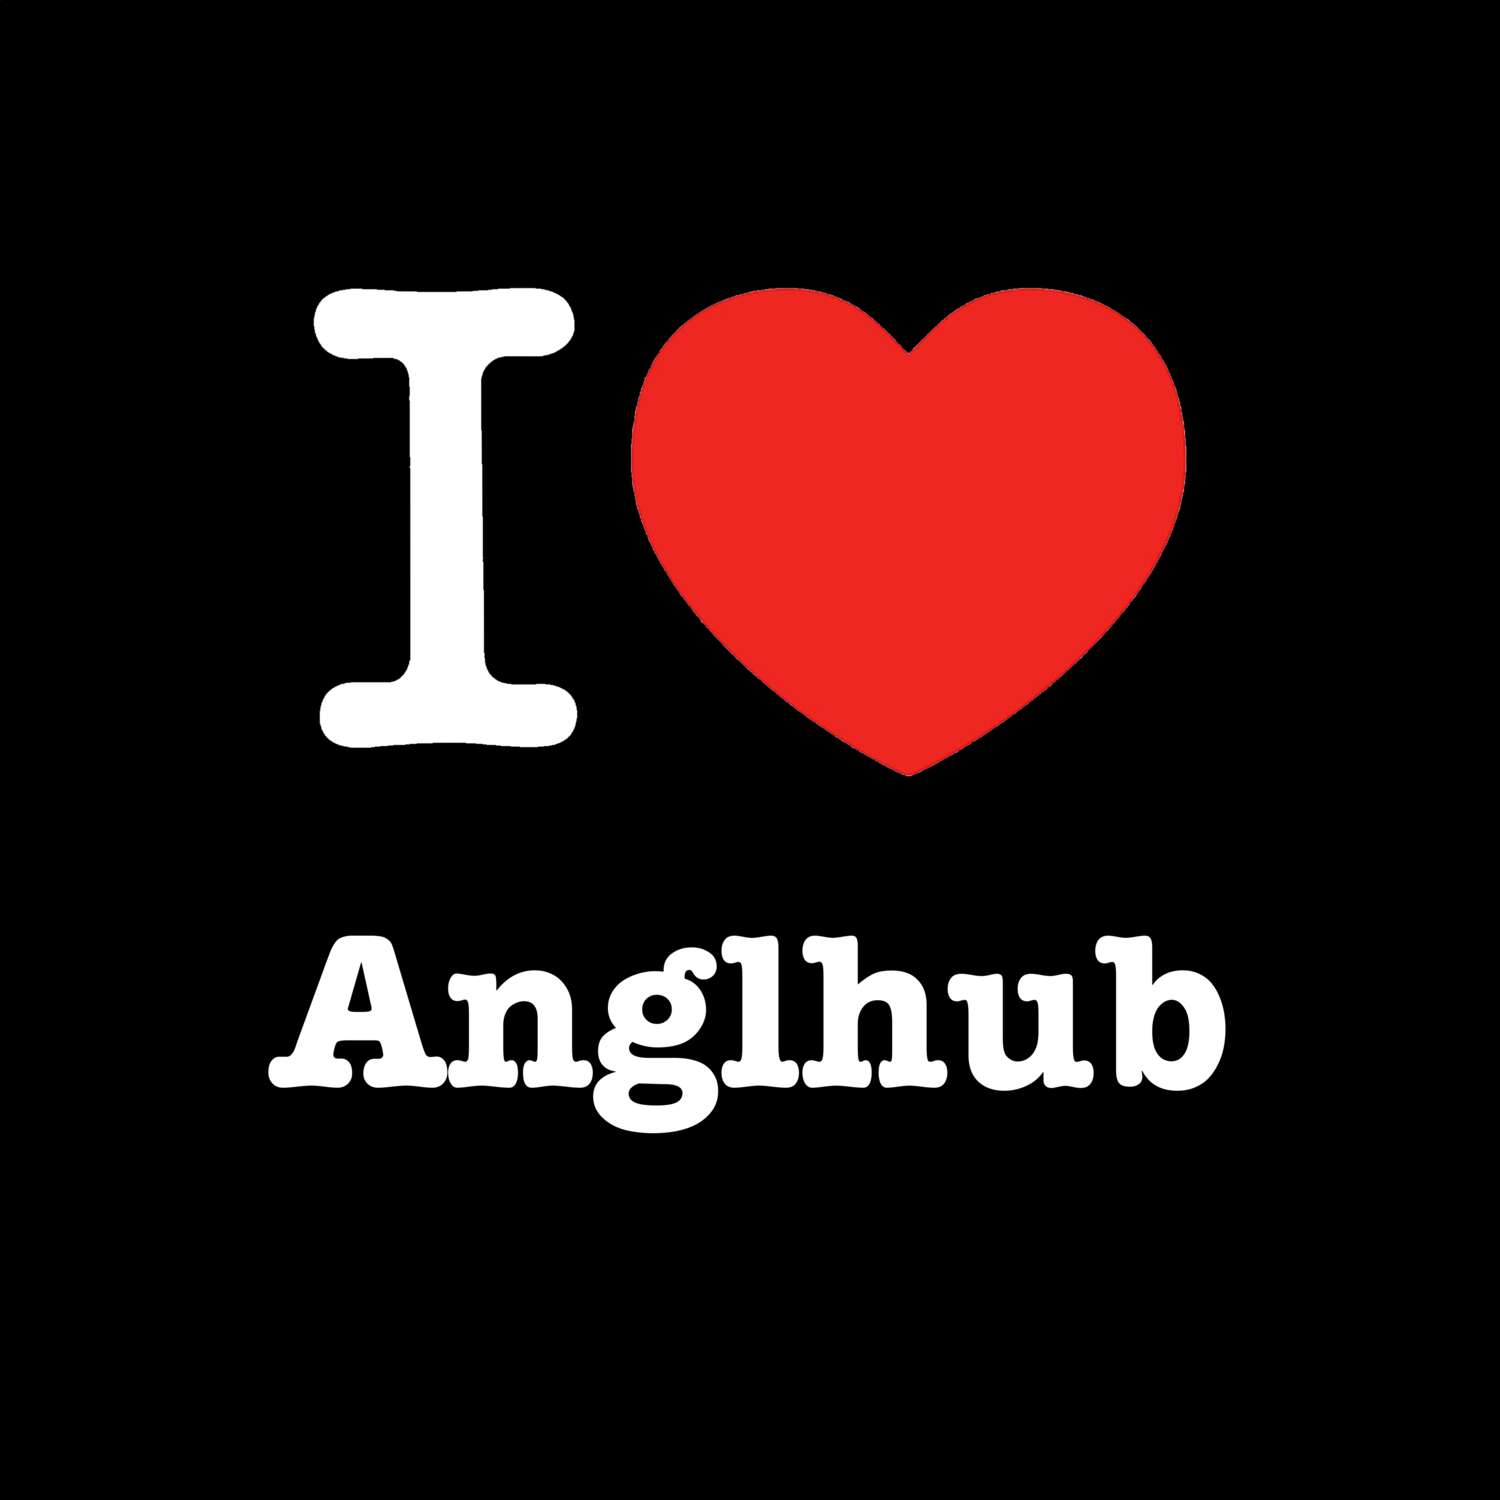 Anglhub T-Shirt »I love«